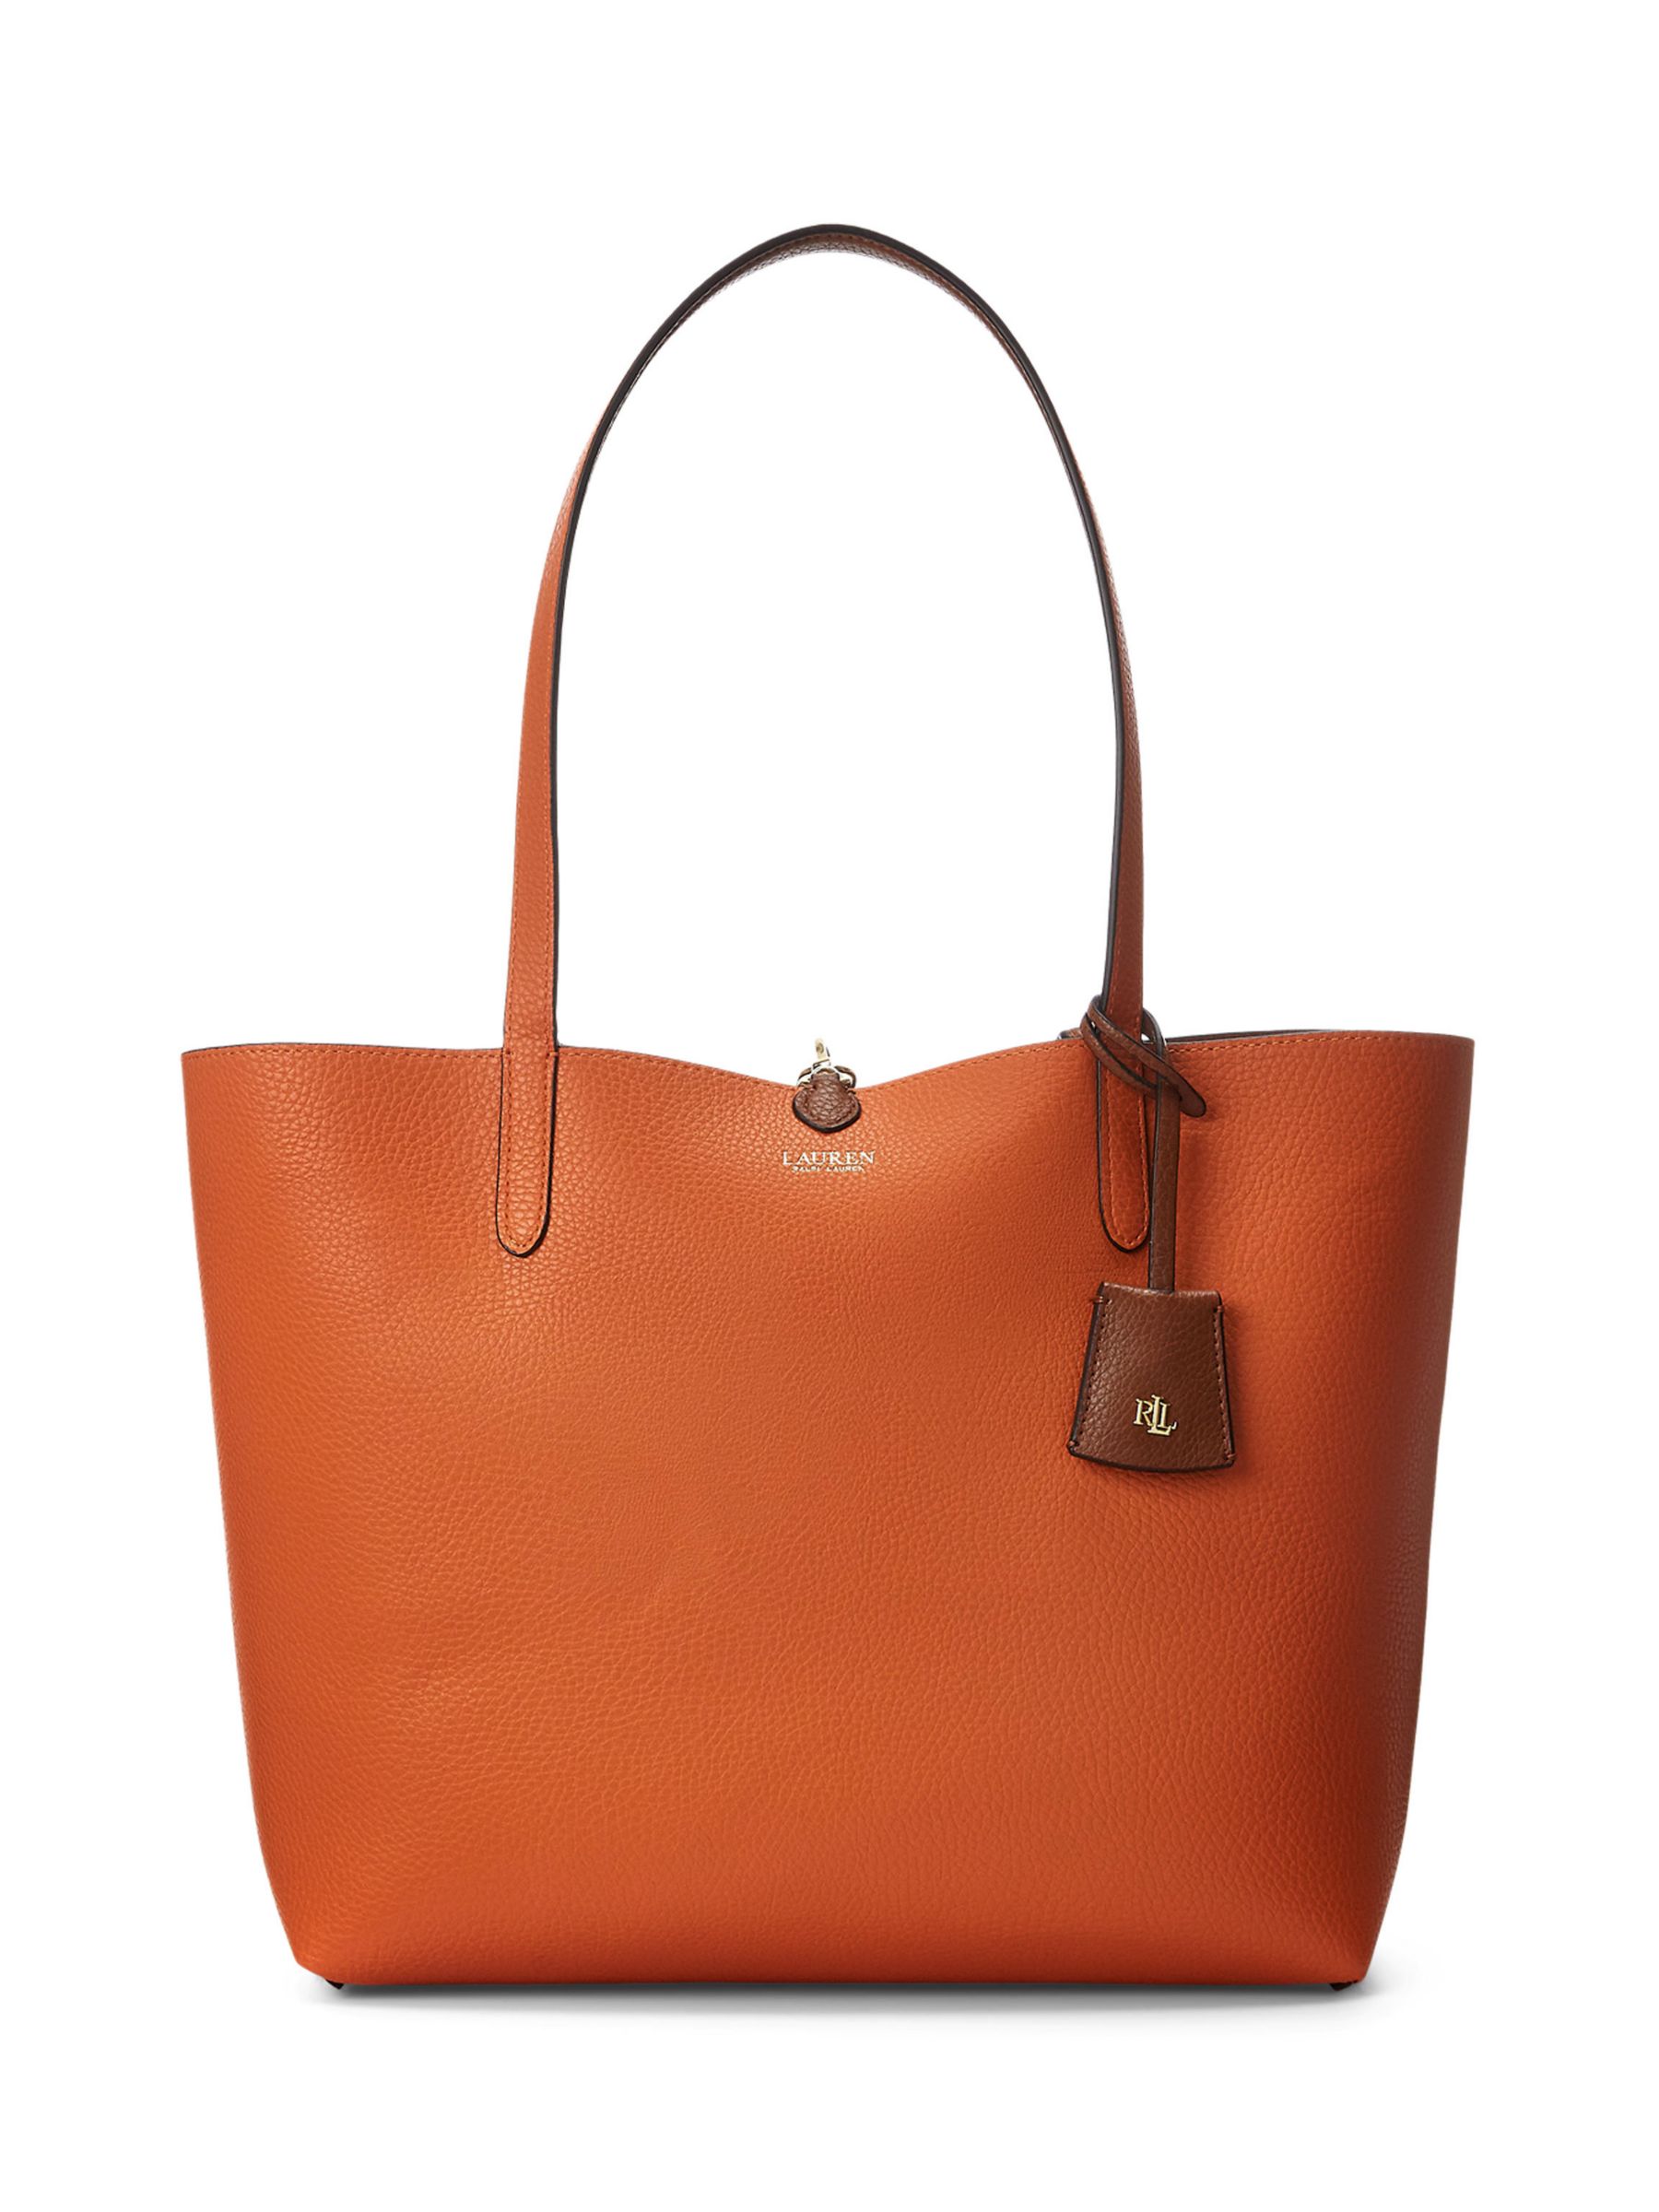 Chelsea Bag - Orange - Totes Luxe UK Brown